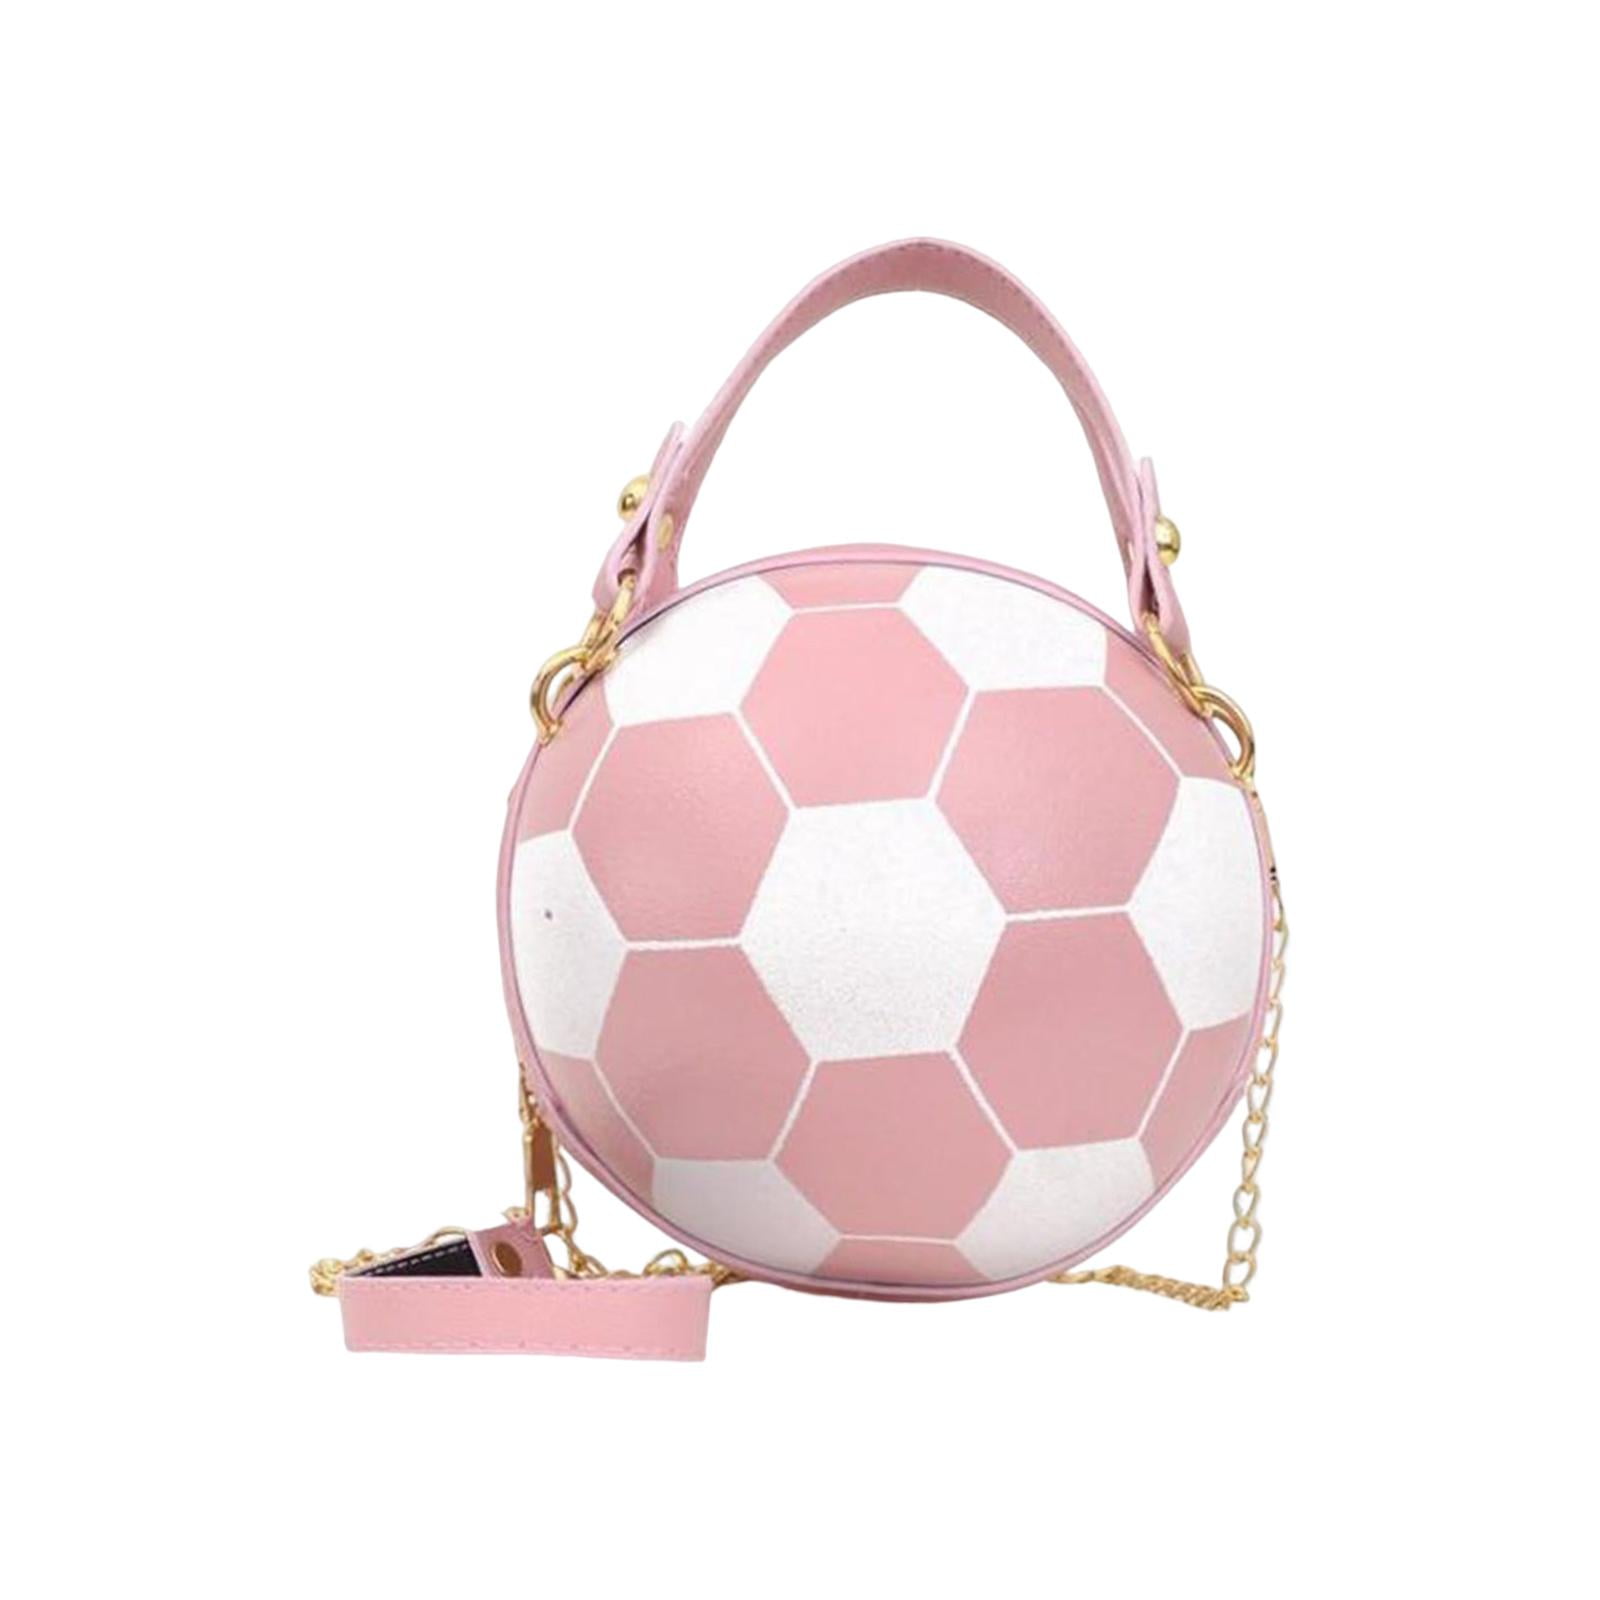 Big Capacity Football Shaped Cross Body Bag Purse Clutch Round Handbag  Fashion PU Shoulder Bag for Lady,Vacation,Travel Pink 